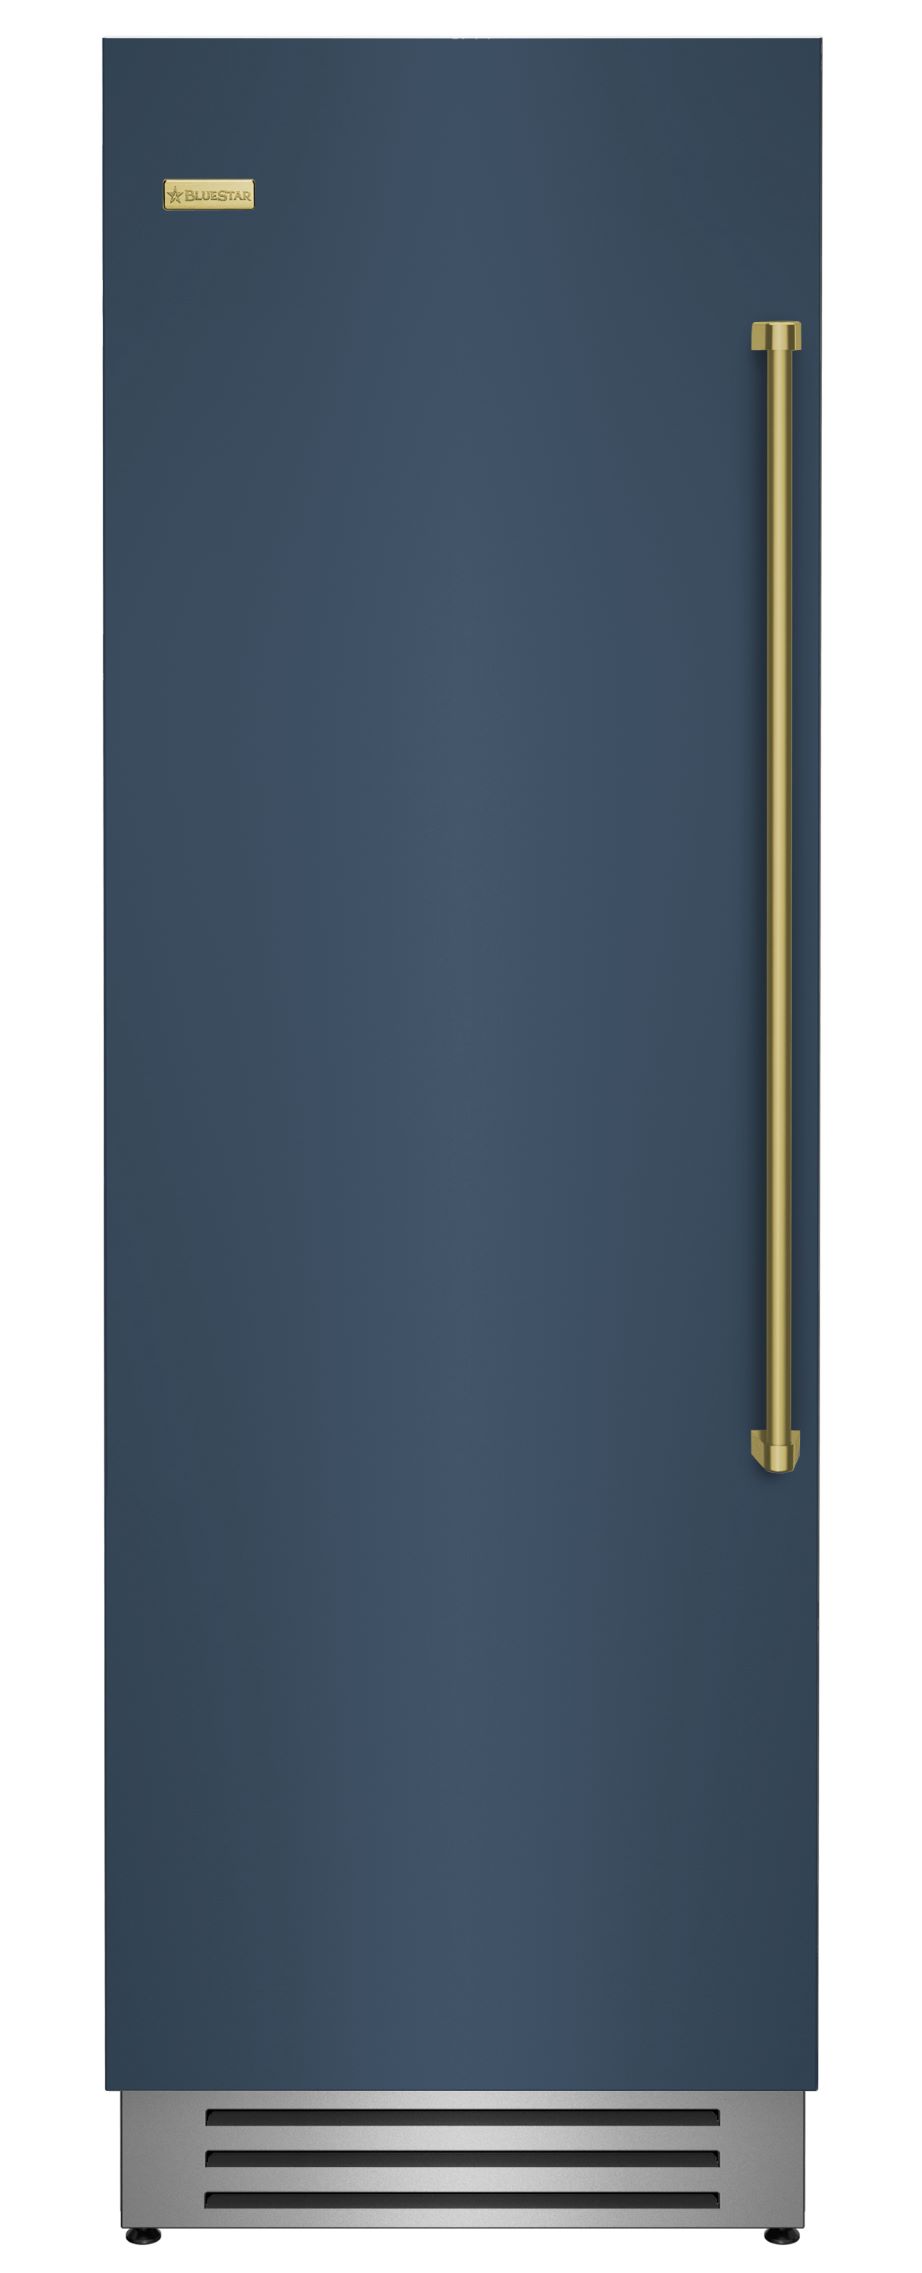 BlueStar Column Refrigerators & Freezers